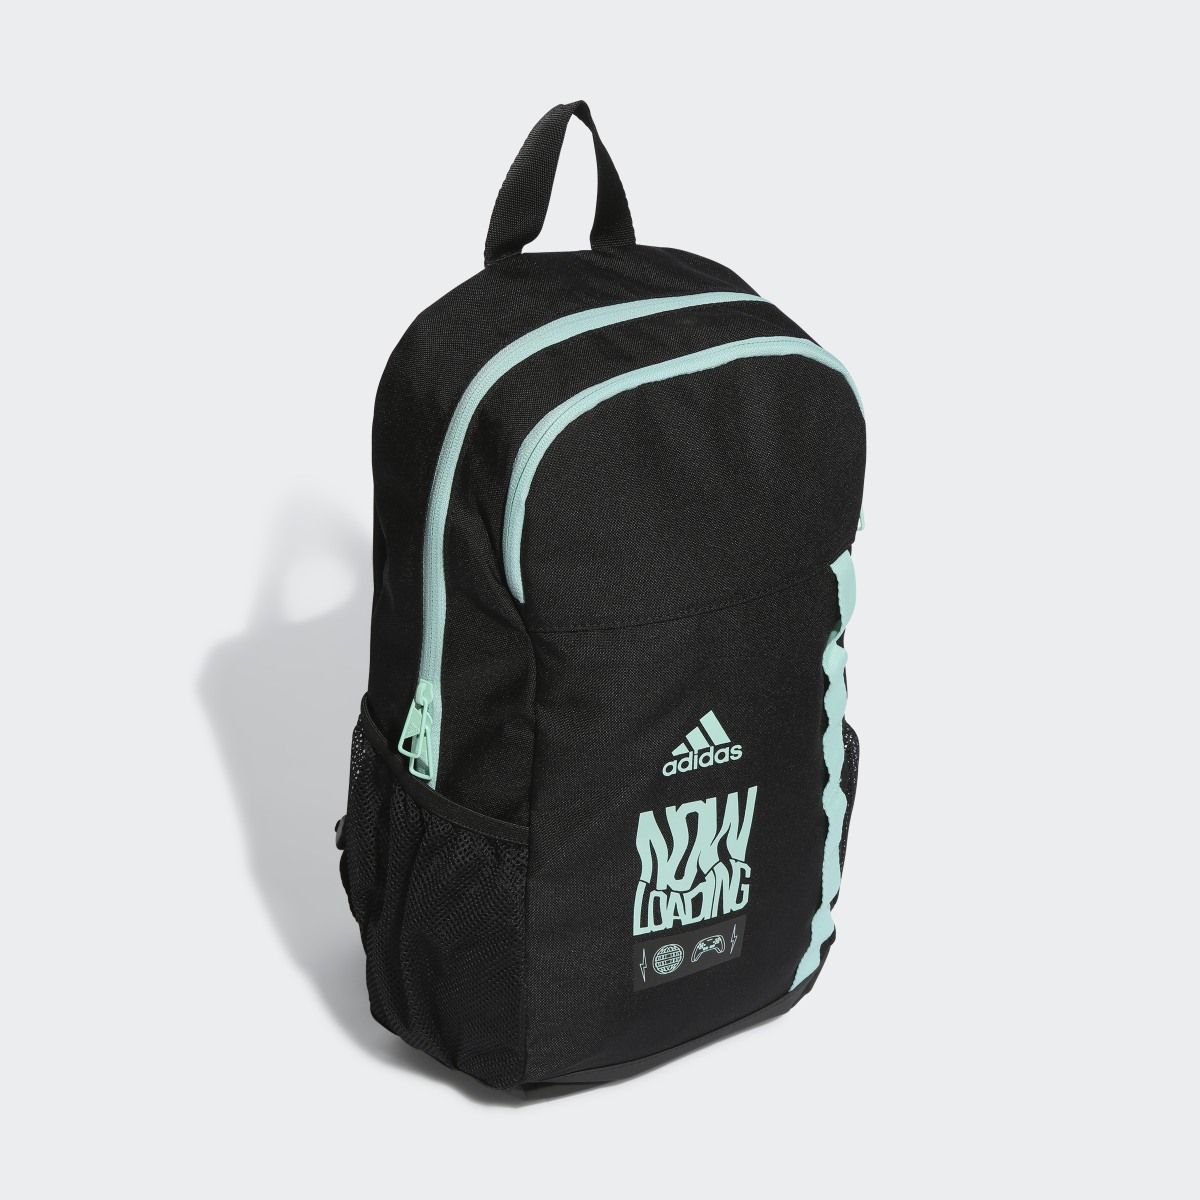 Adidas ARKD3 Backpack. 4